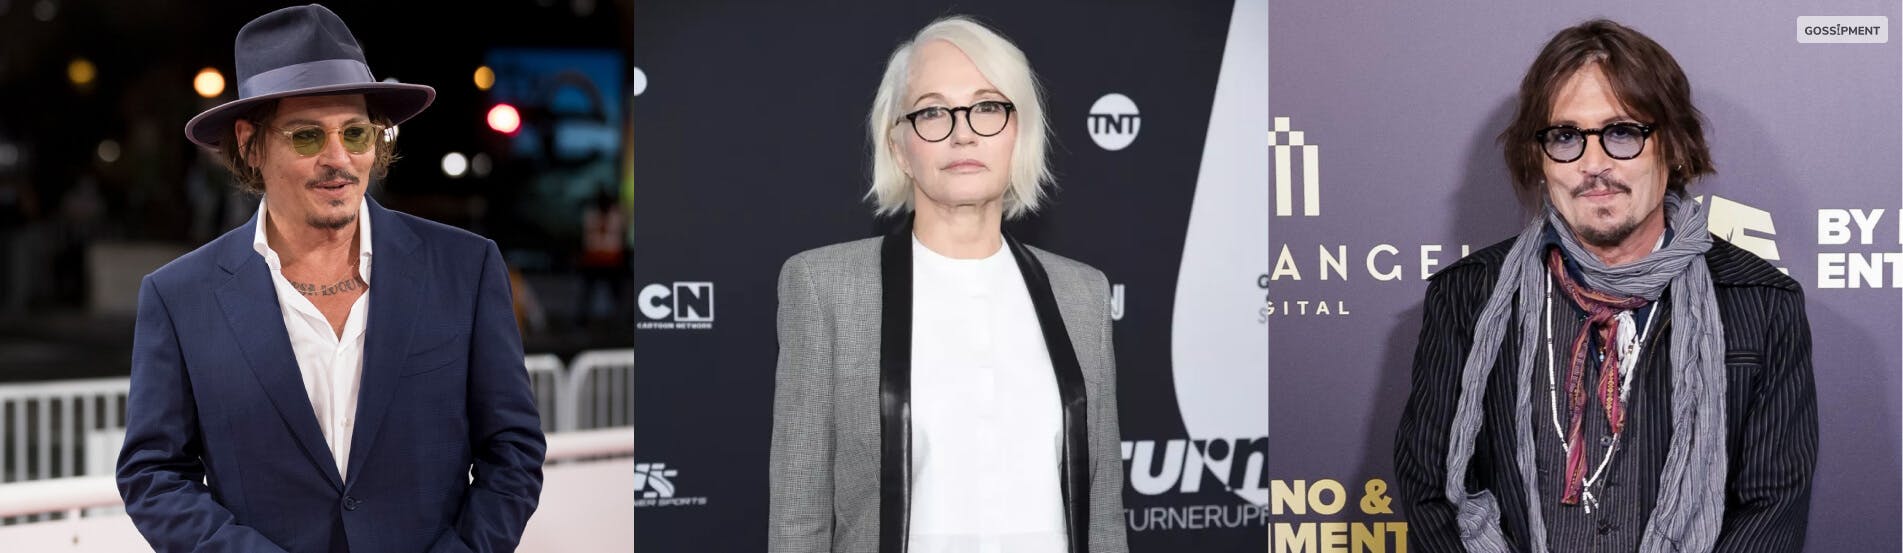 Cover Image for “Protested A Little”: Ellen Barkin Claims Johnny Depp Gave Her Sedatives Before Sex